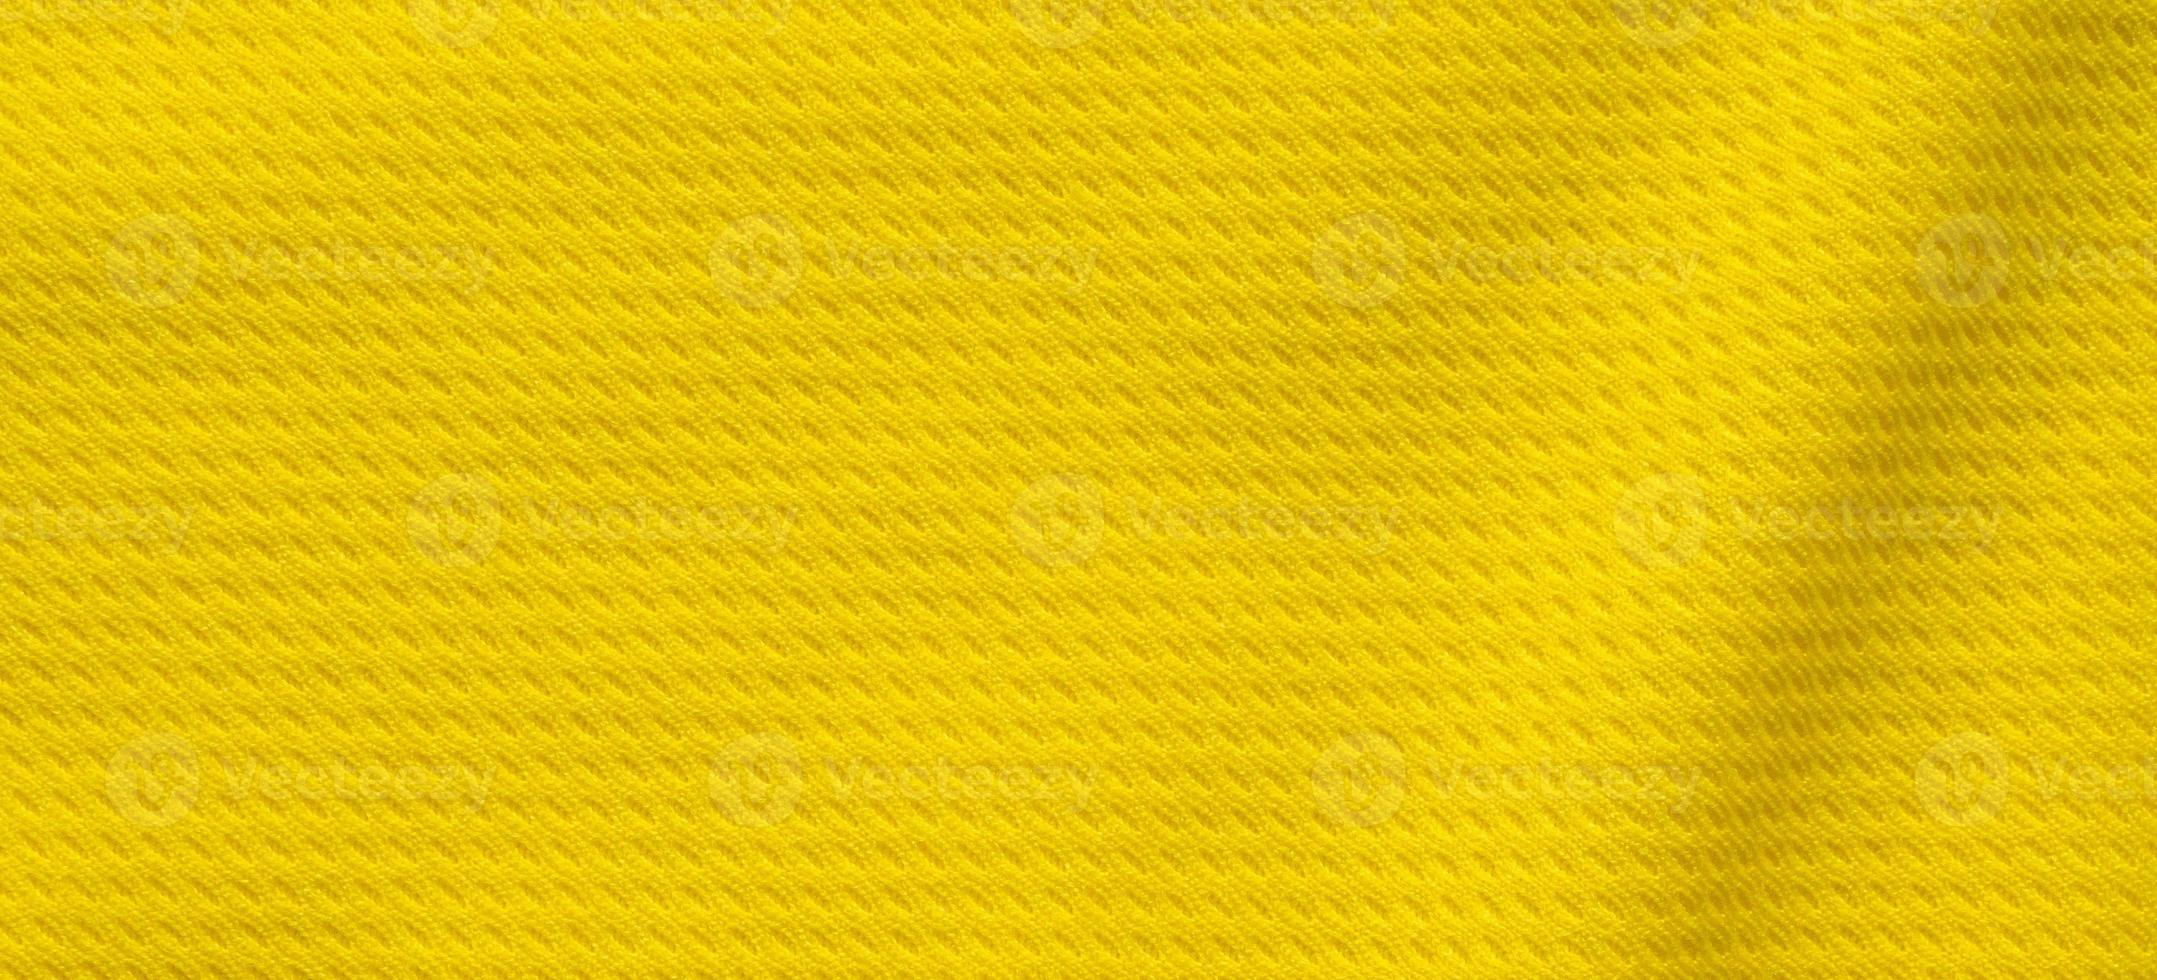 Yellow sports clothing fabric football shirt jersey texture close up photo